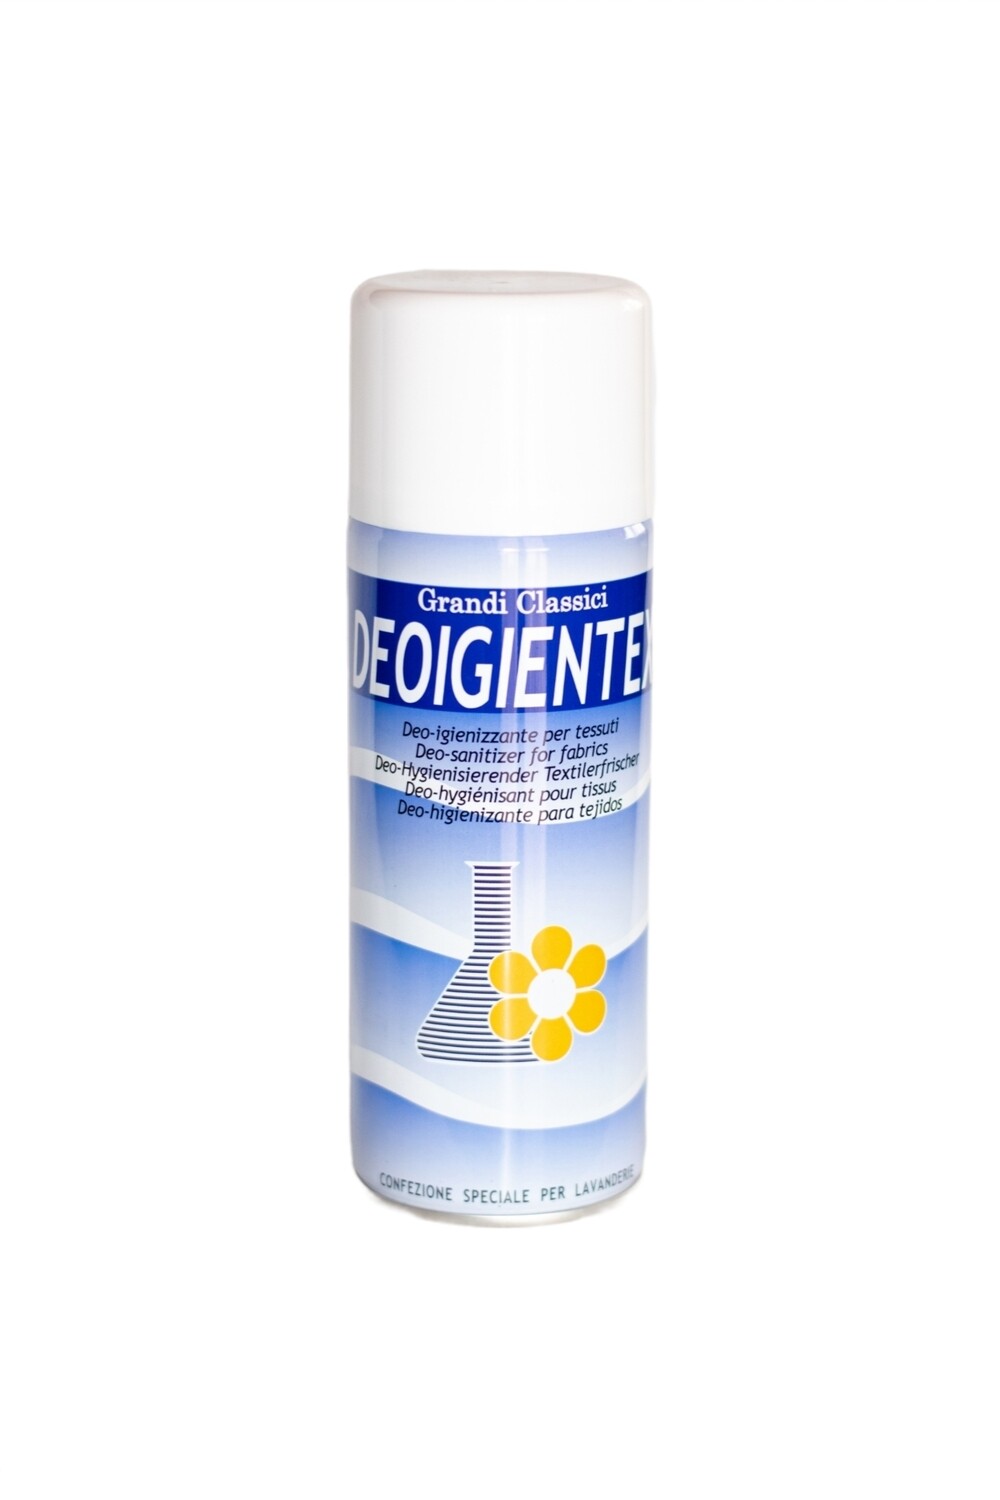 RAMPI DeoIgientex - Deodorante Spray Igienizzante Igiensoft